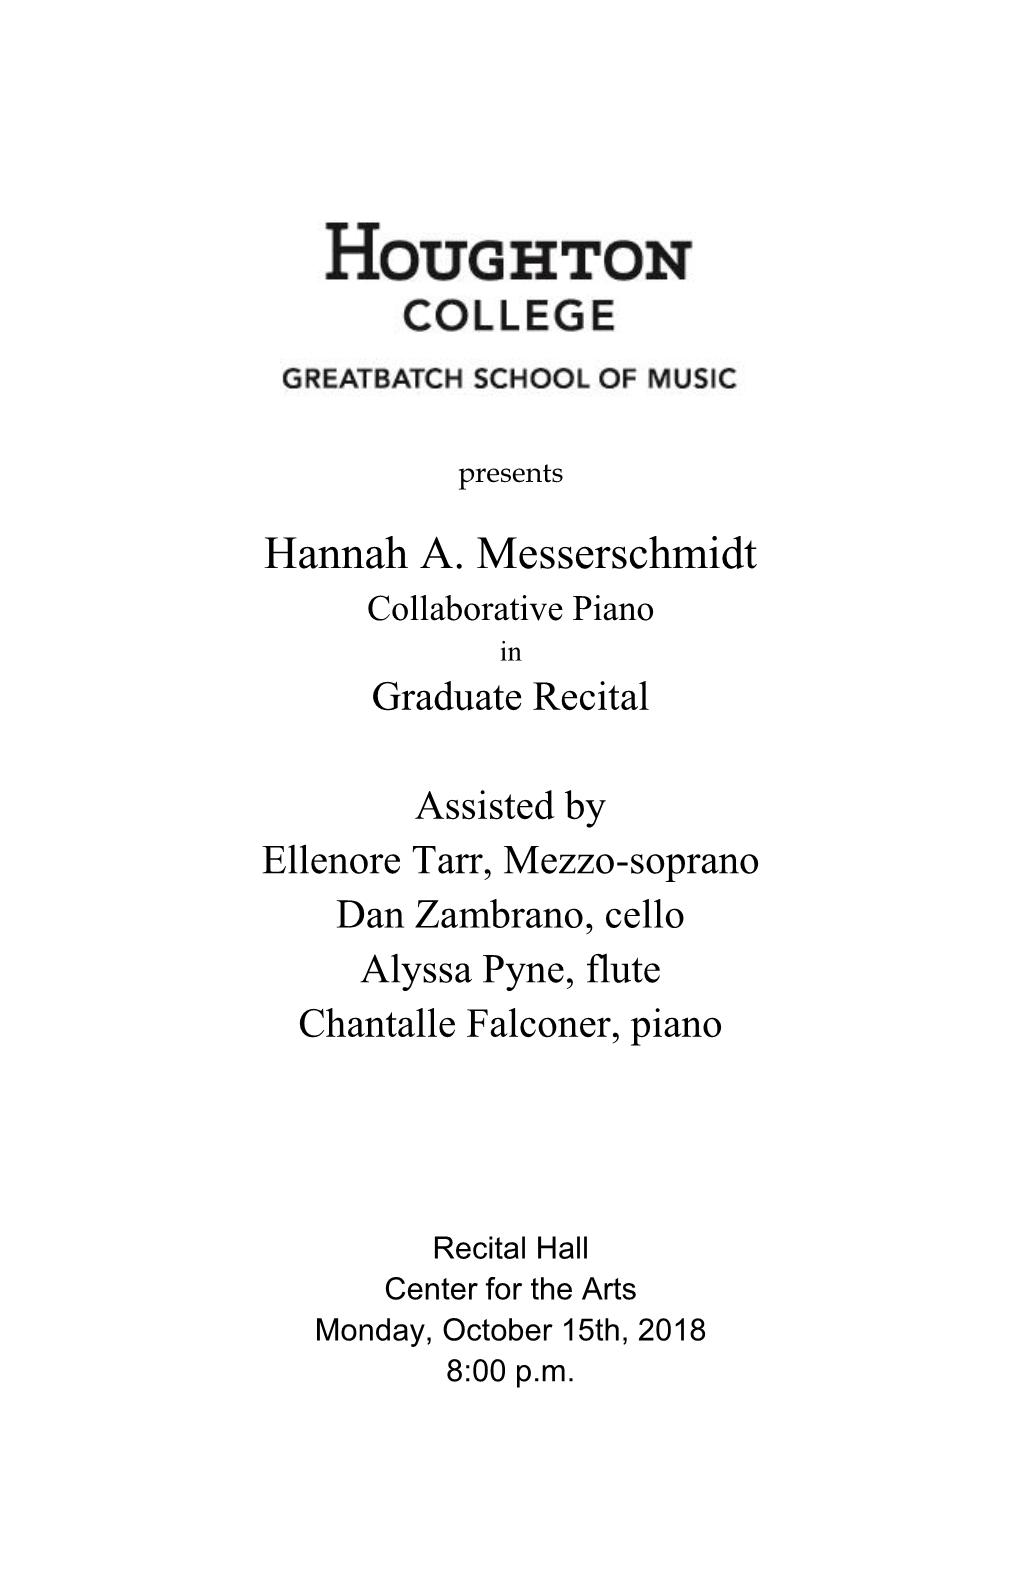 Hannah A. Messerschmidt Collaborative Piano in Graduate Recital